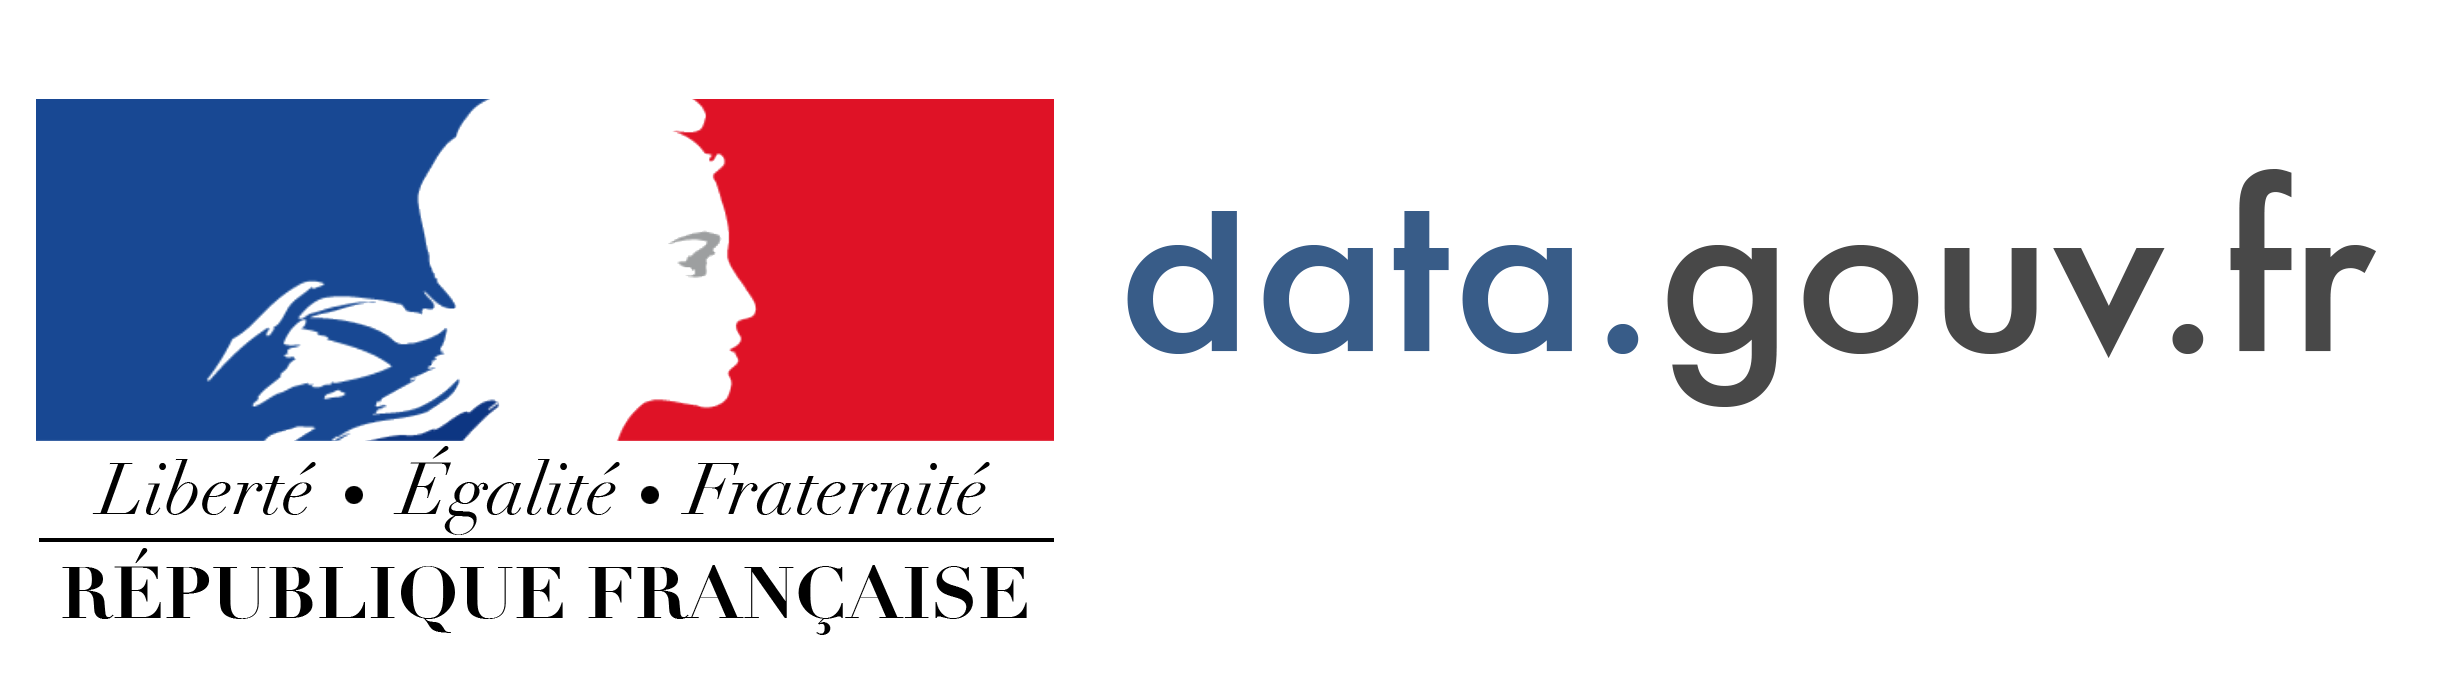 Logo data.gouv.fr